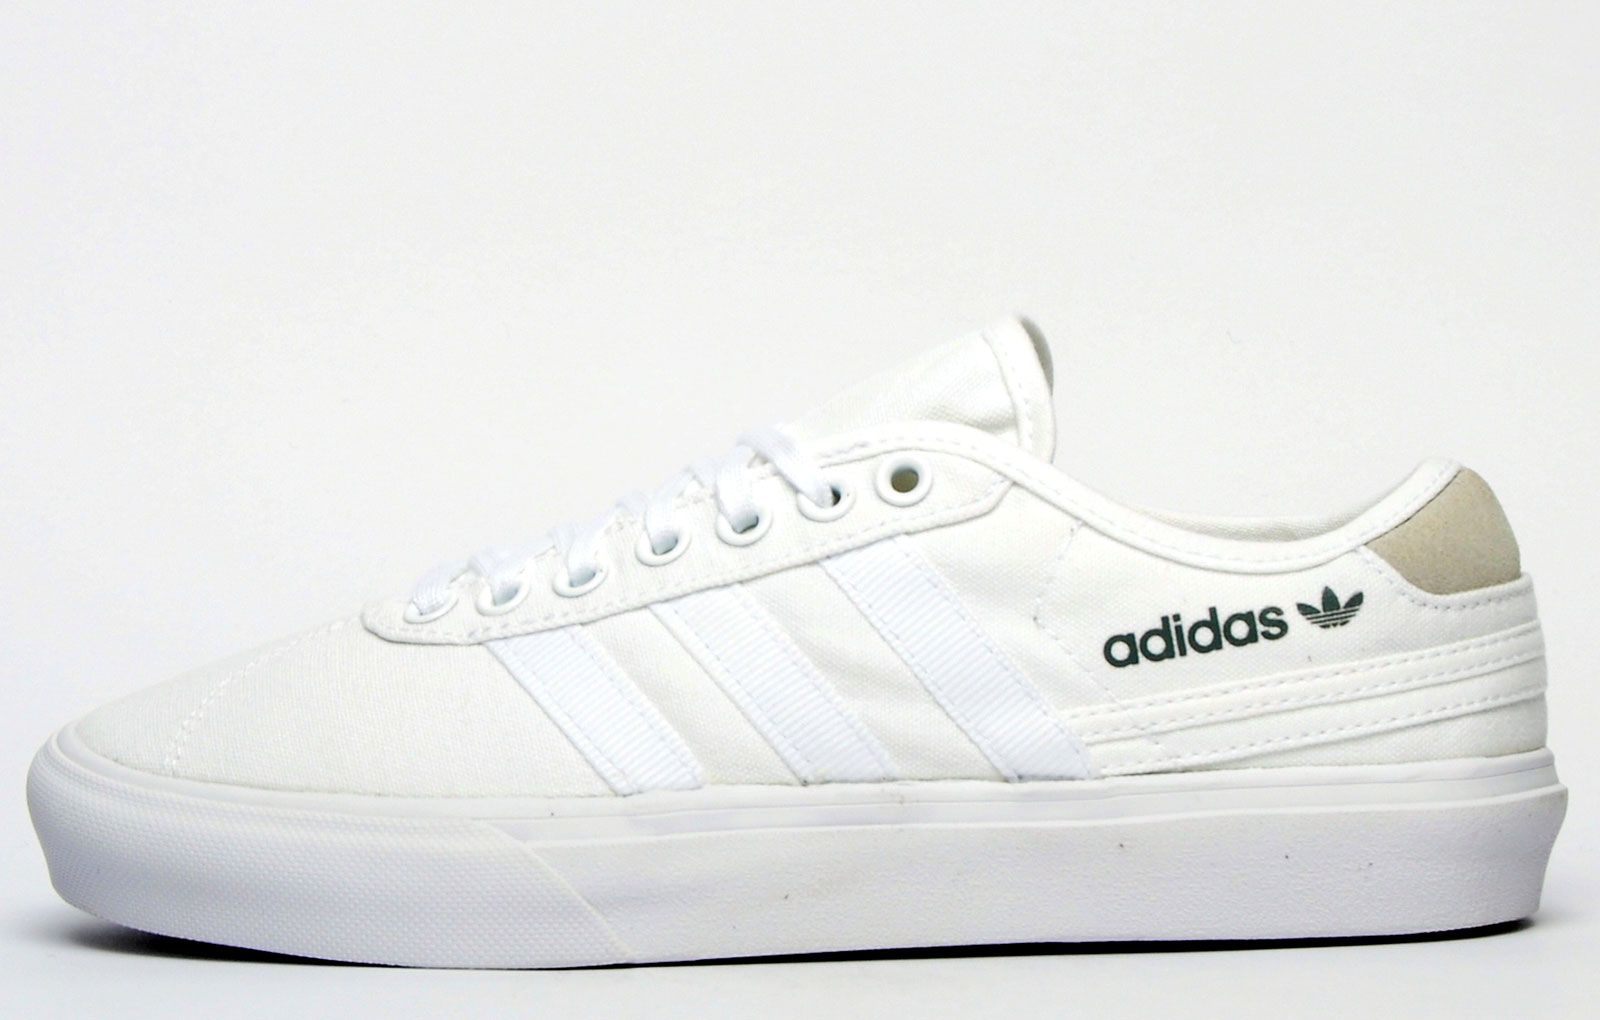 Klassiek ontmoet comfort met de op skates geïnspireerde Adidas Delpala van Adidas Originals.